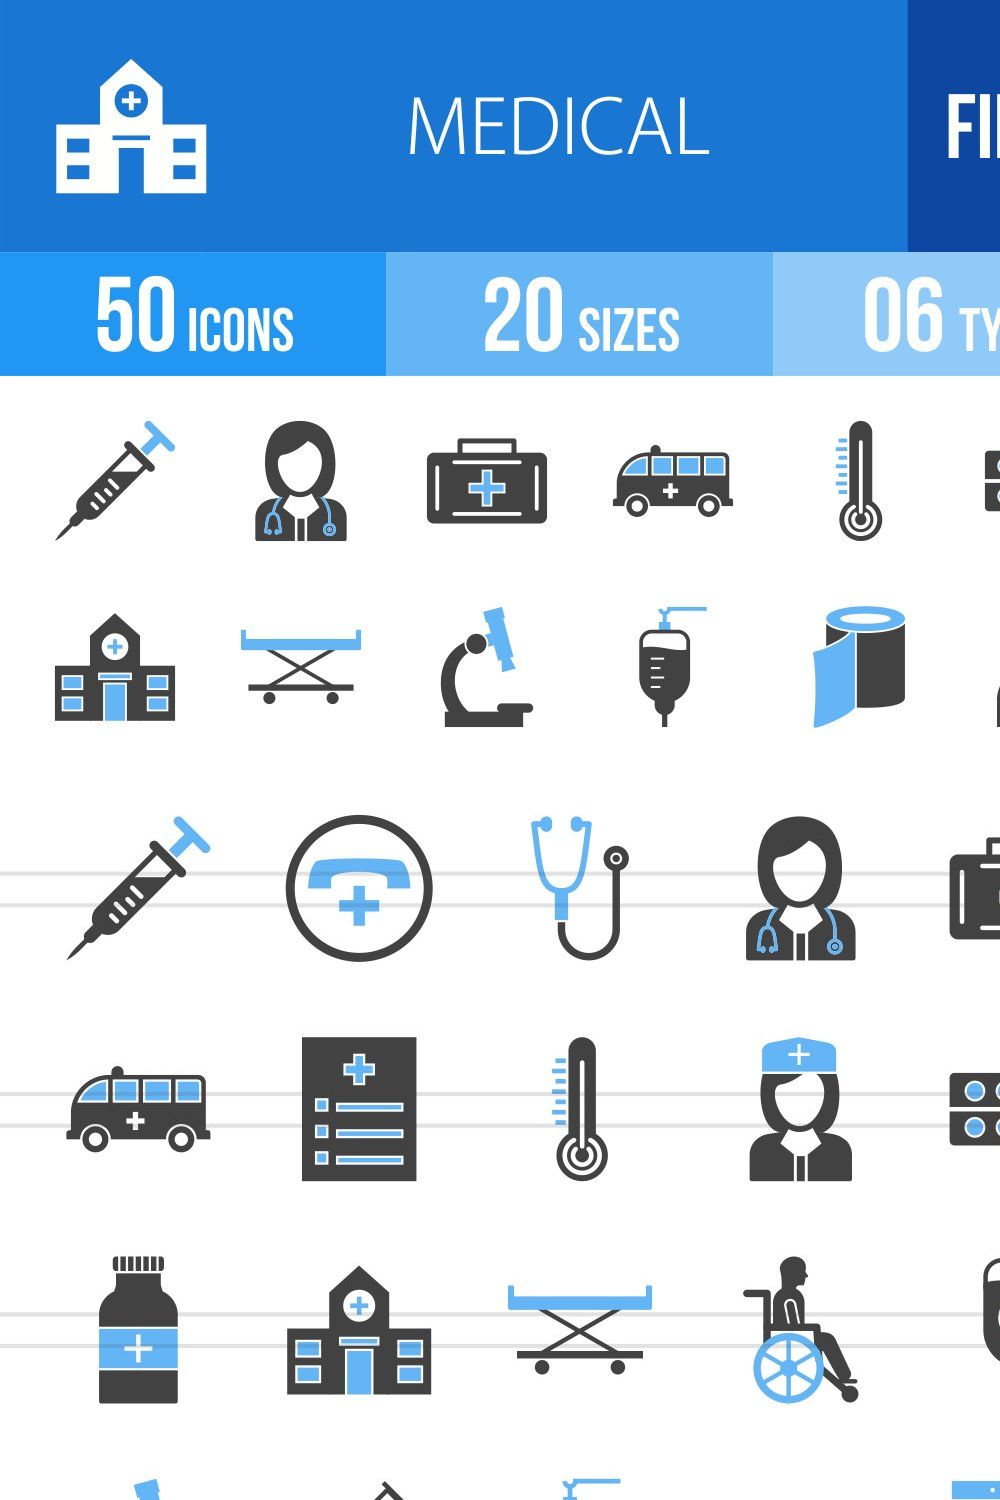 50 Medical Filled Blue & Black Icons pinterest preview image.